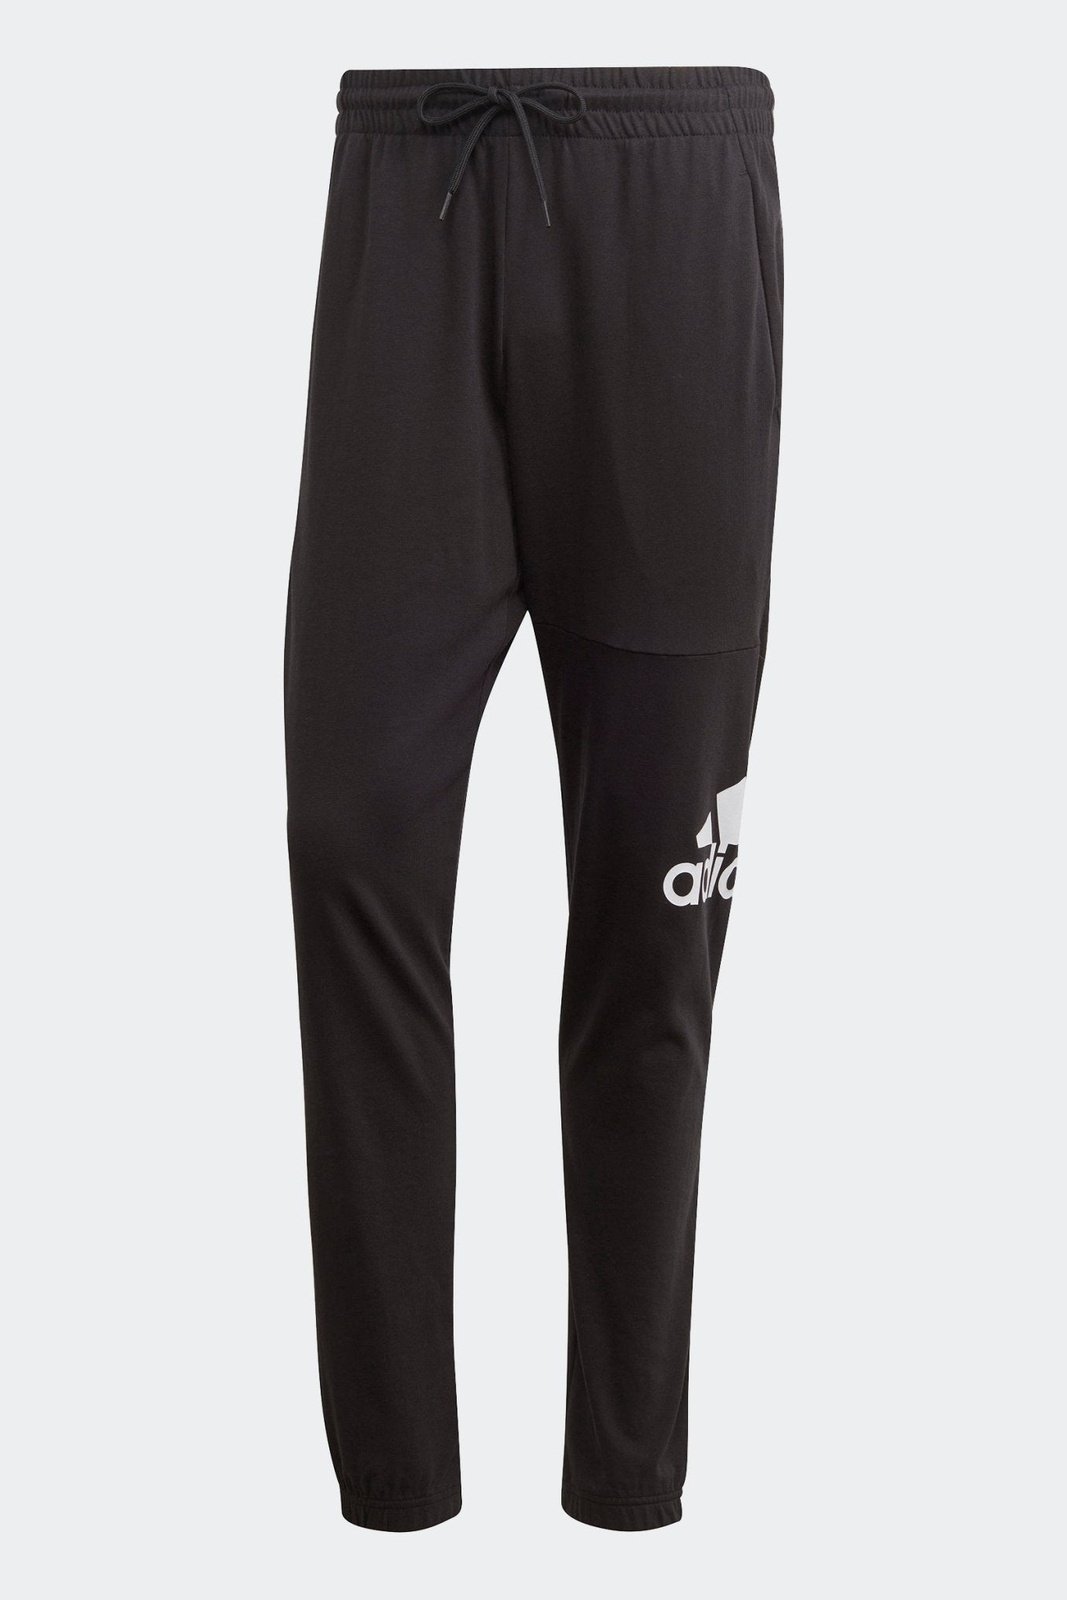 ADIDAS - מכנסיים ארוכים לגברים ESSENTIALS SINGLE JERSEY בצבע שחור - MASHBIR//365